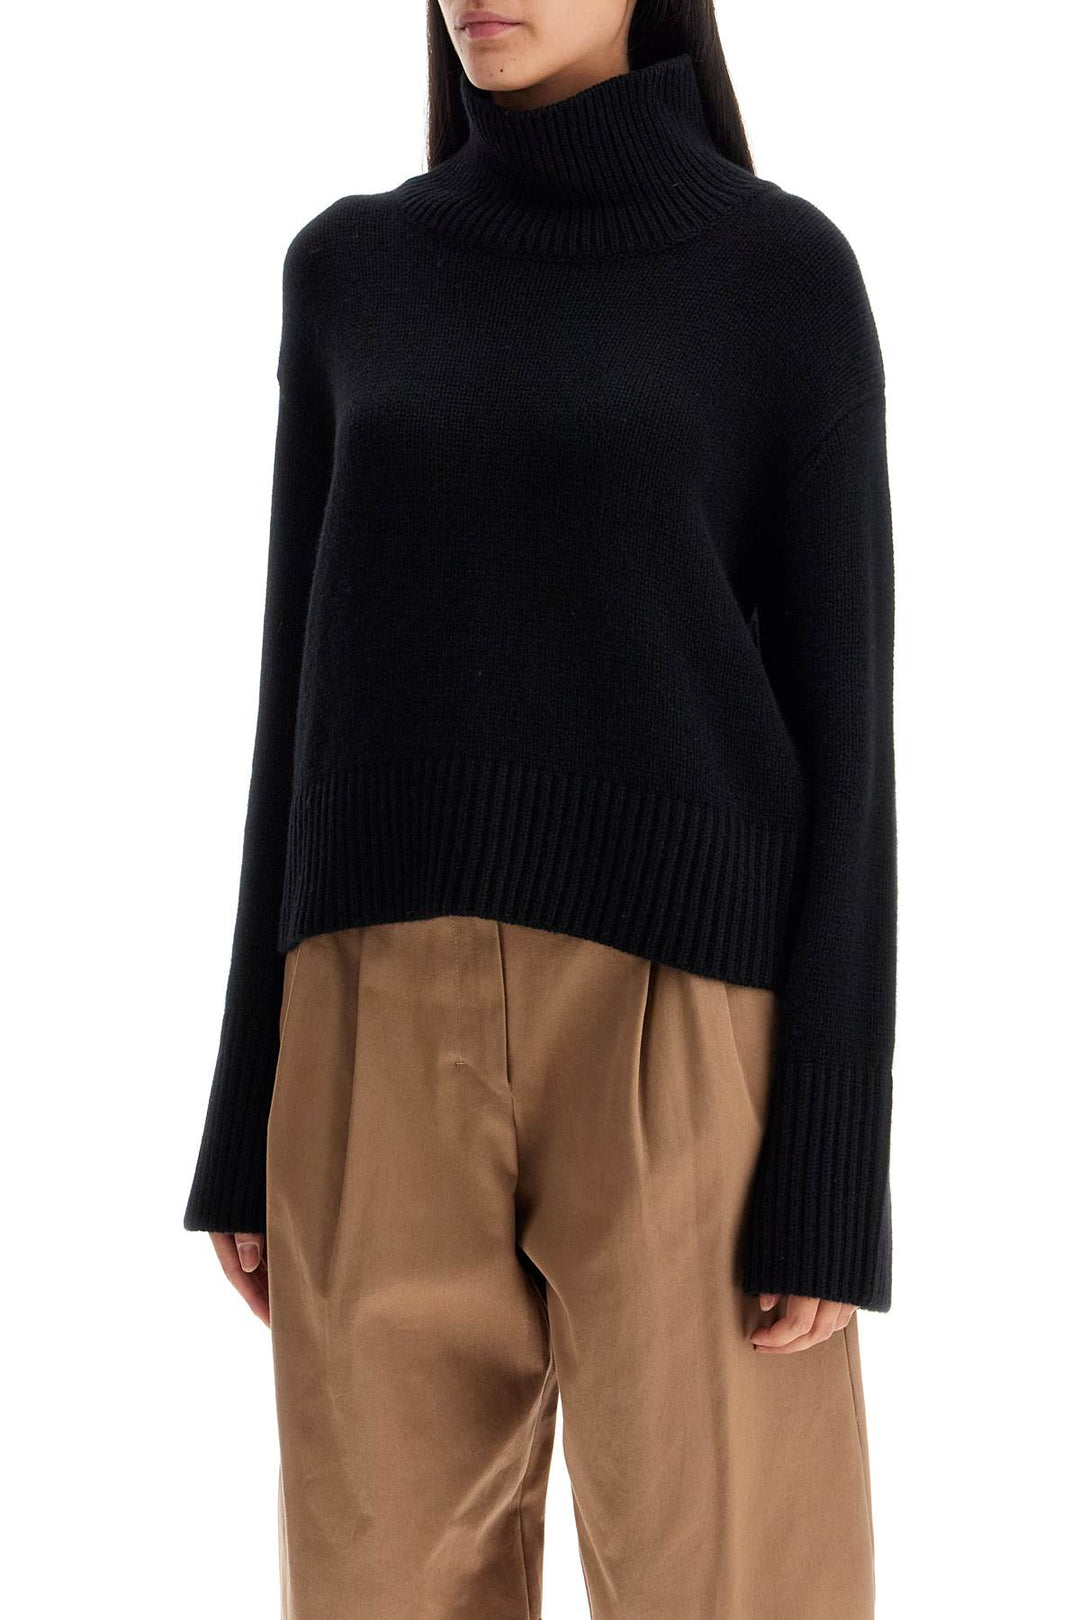 Lisa Yang High Necked Fleur Sweater   Black